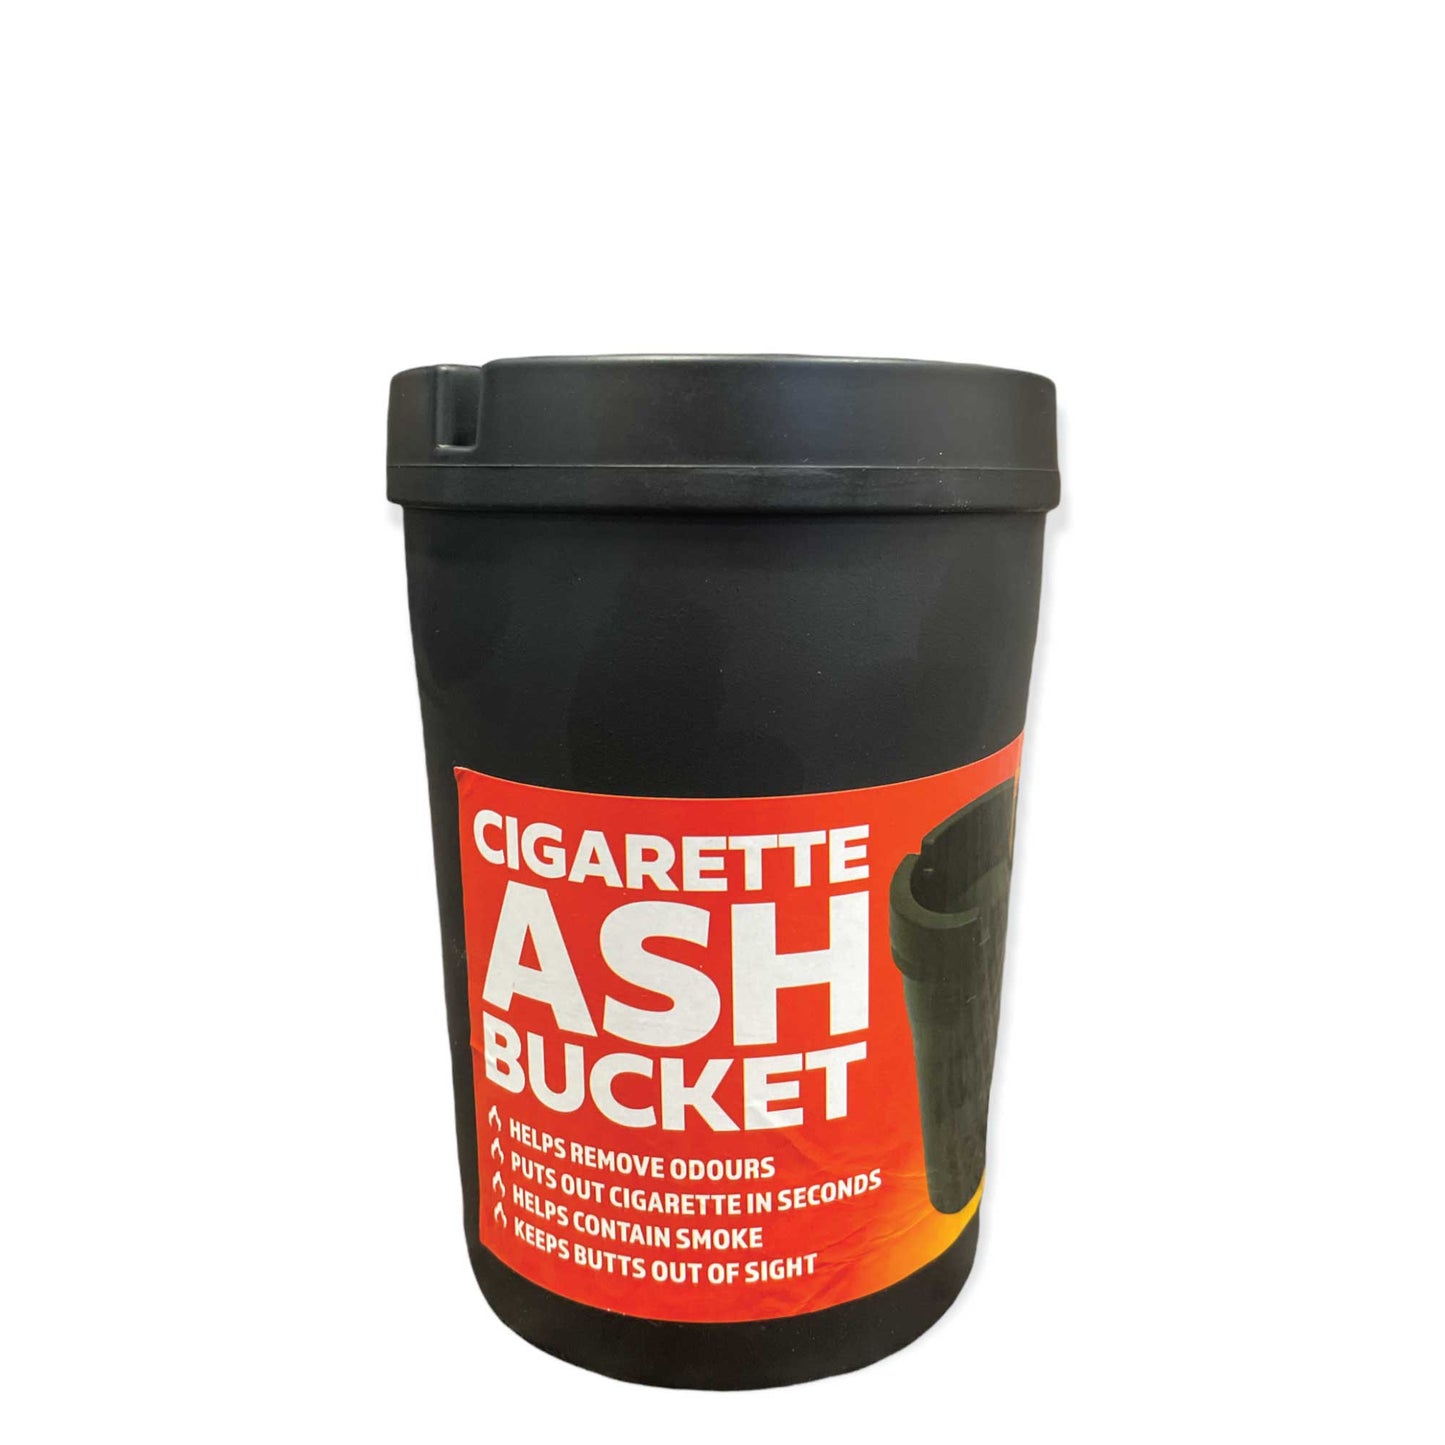 Cigarette Ashtray Bucket Black with Lid Large Tobacco Ash Smoke Car Holder Packs